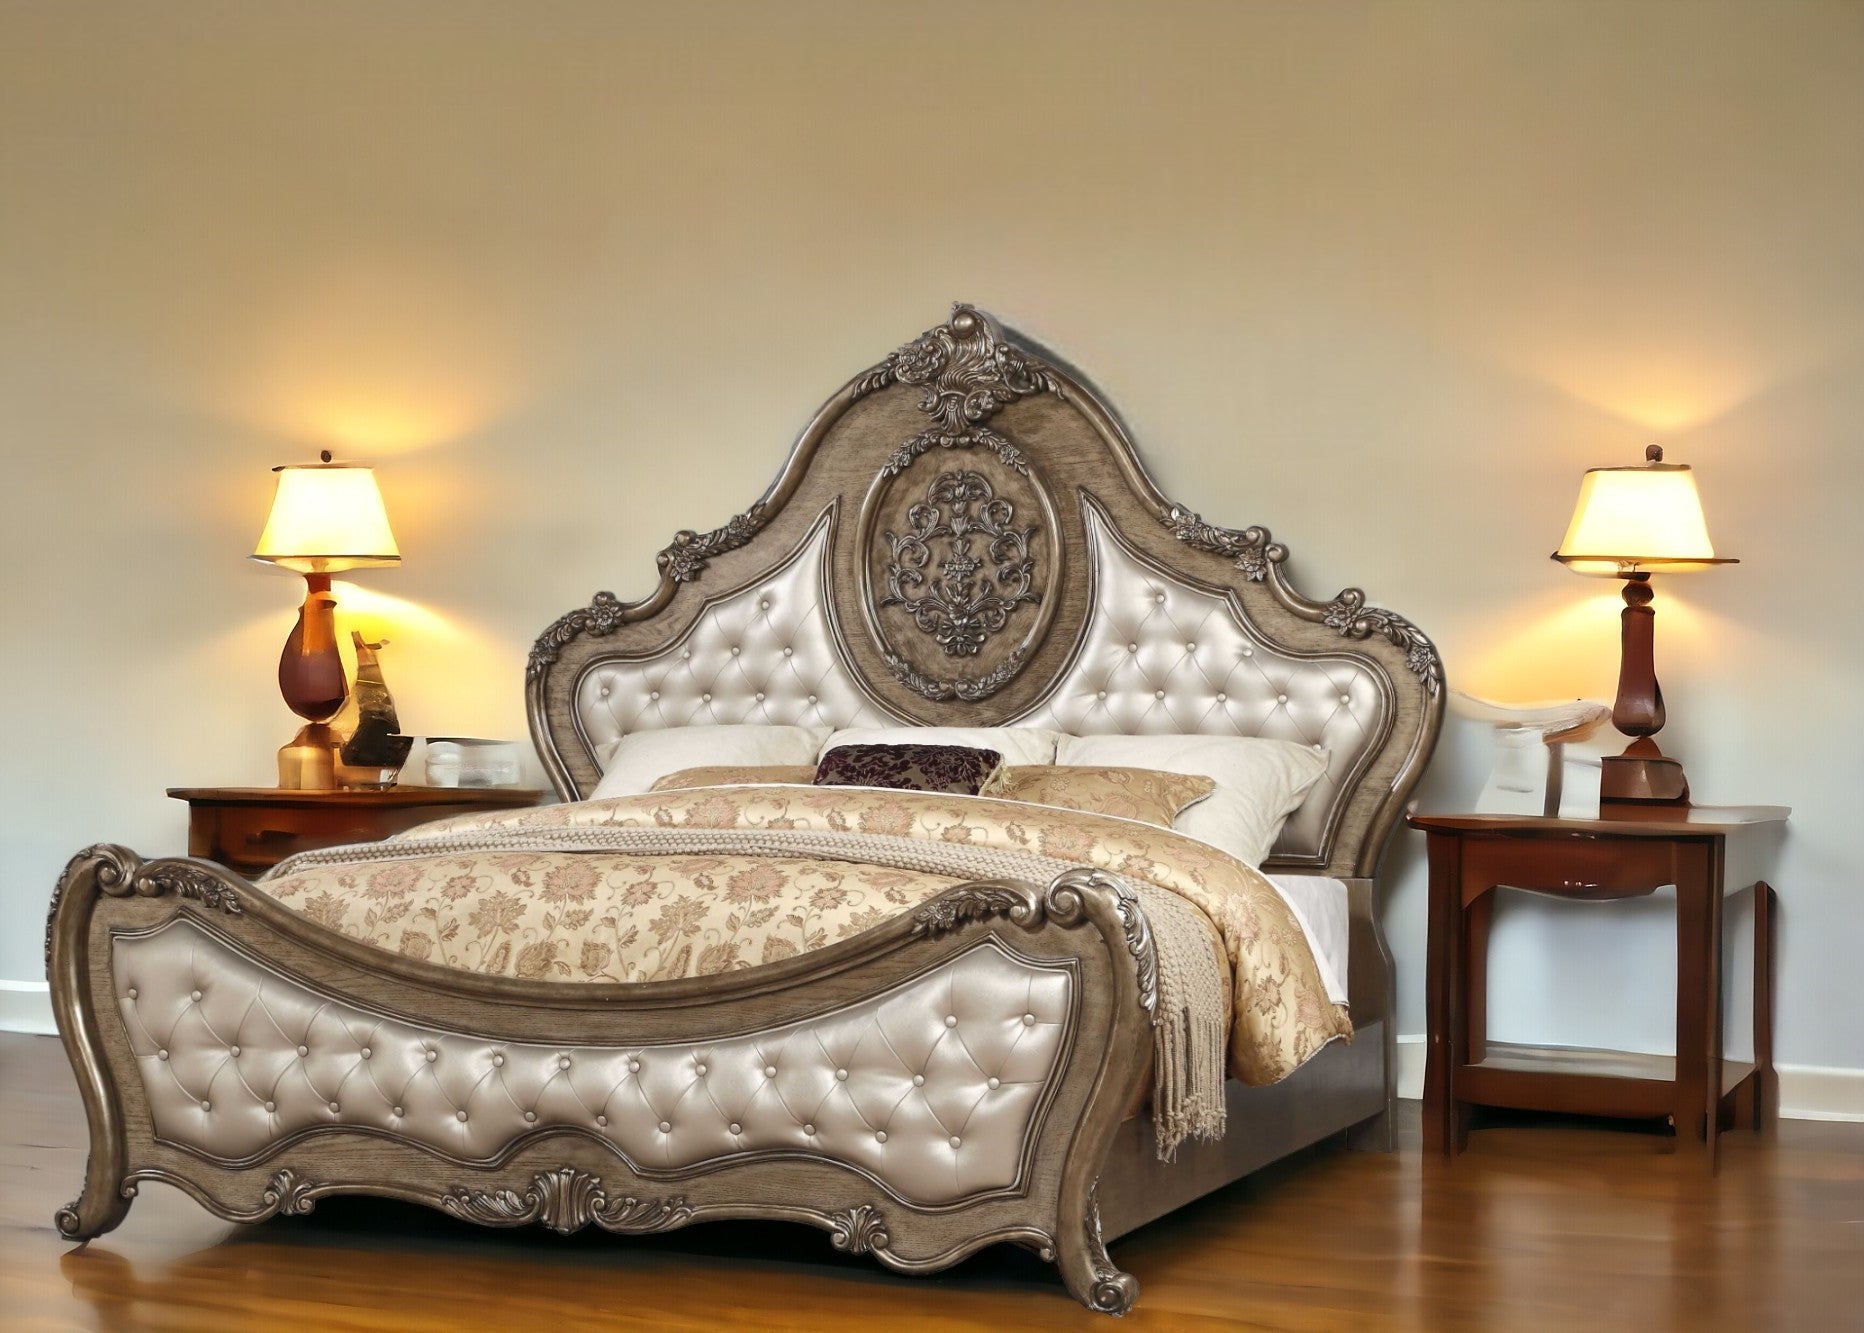 89" X 89" X 76" Pu Vintage Oak Wood Upholstery King Bed